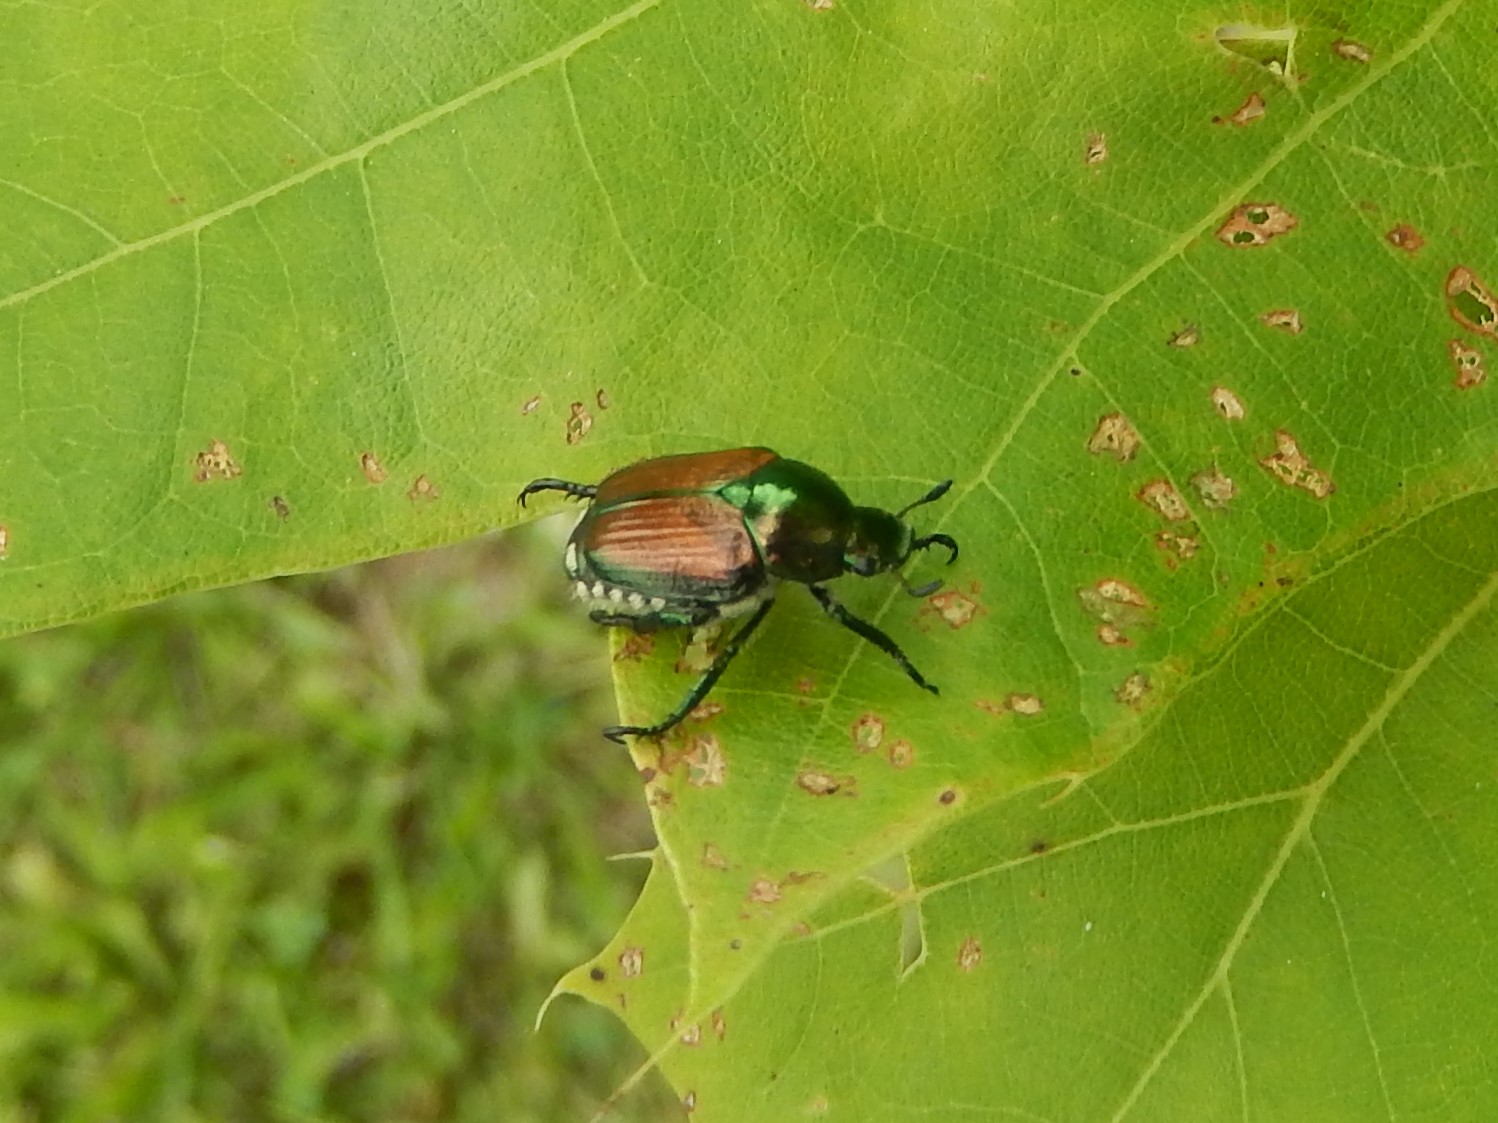 An adult beetle on a leaf.